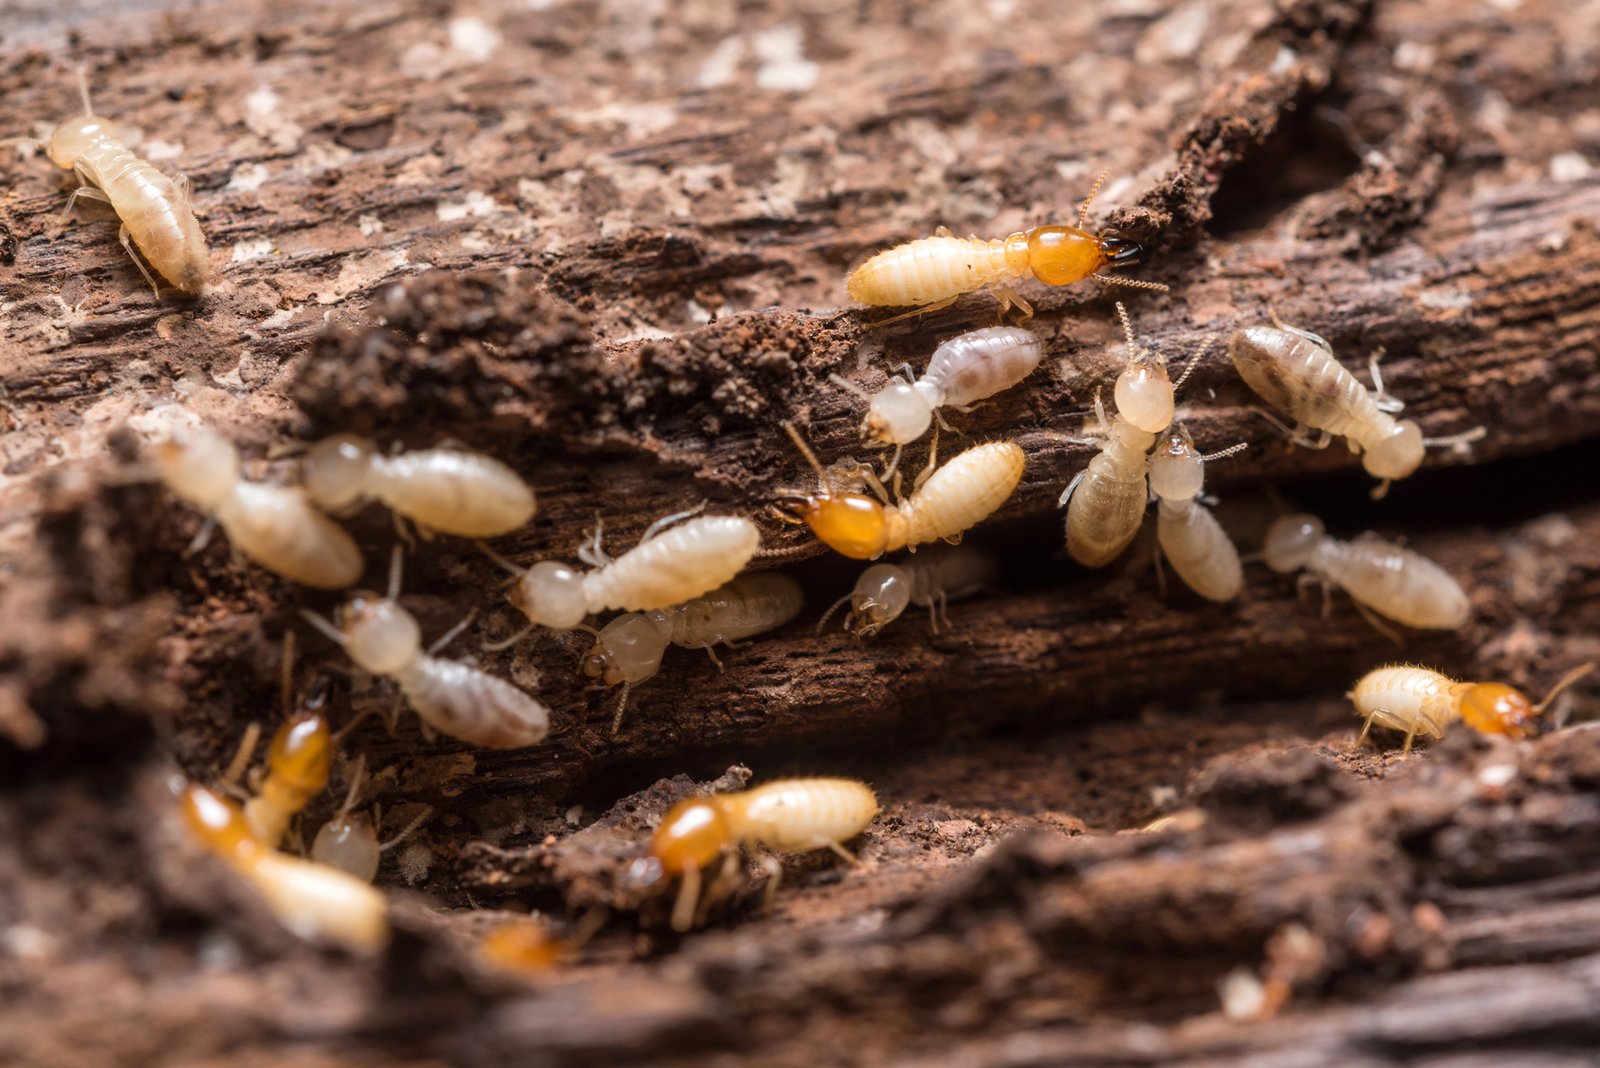 Termite inspection